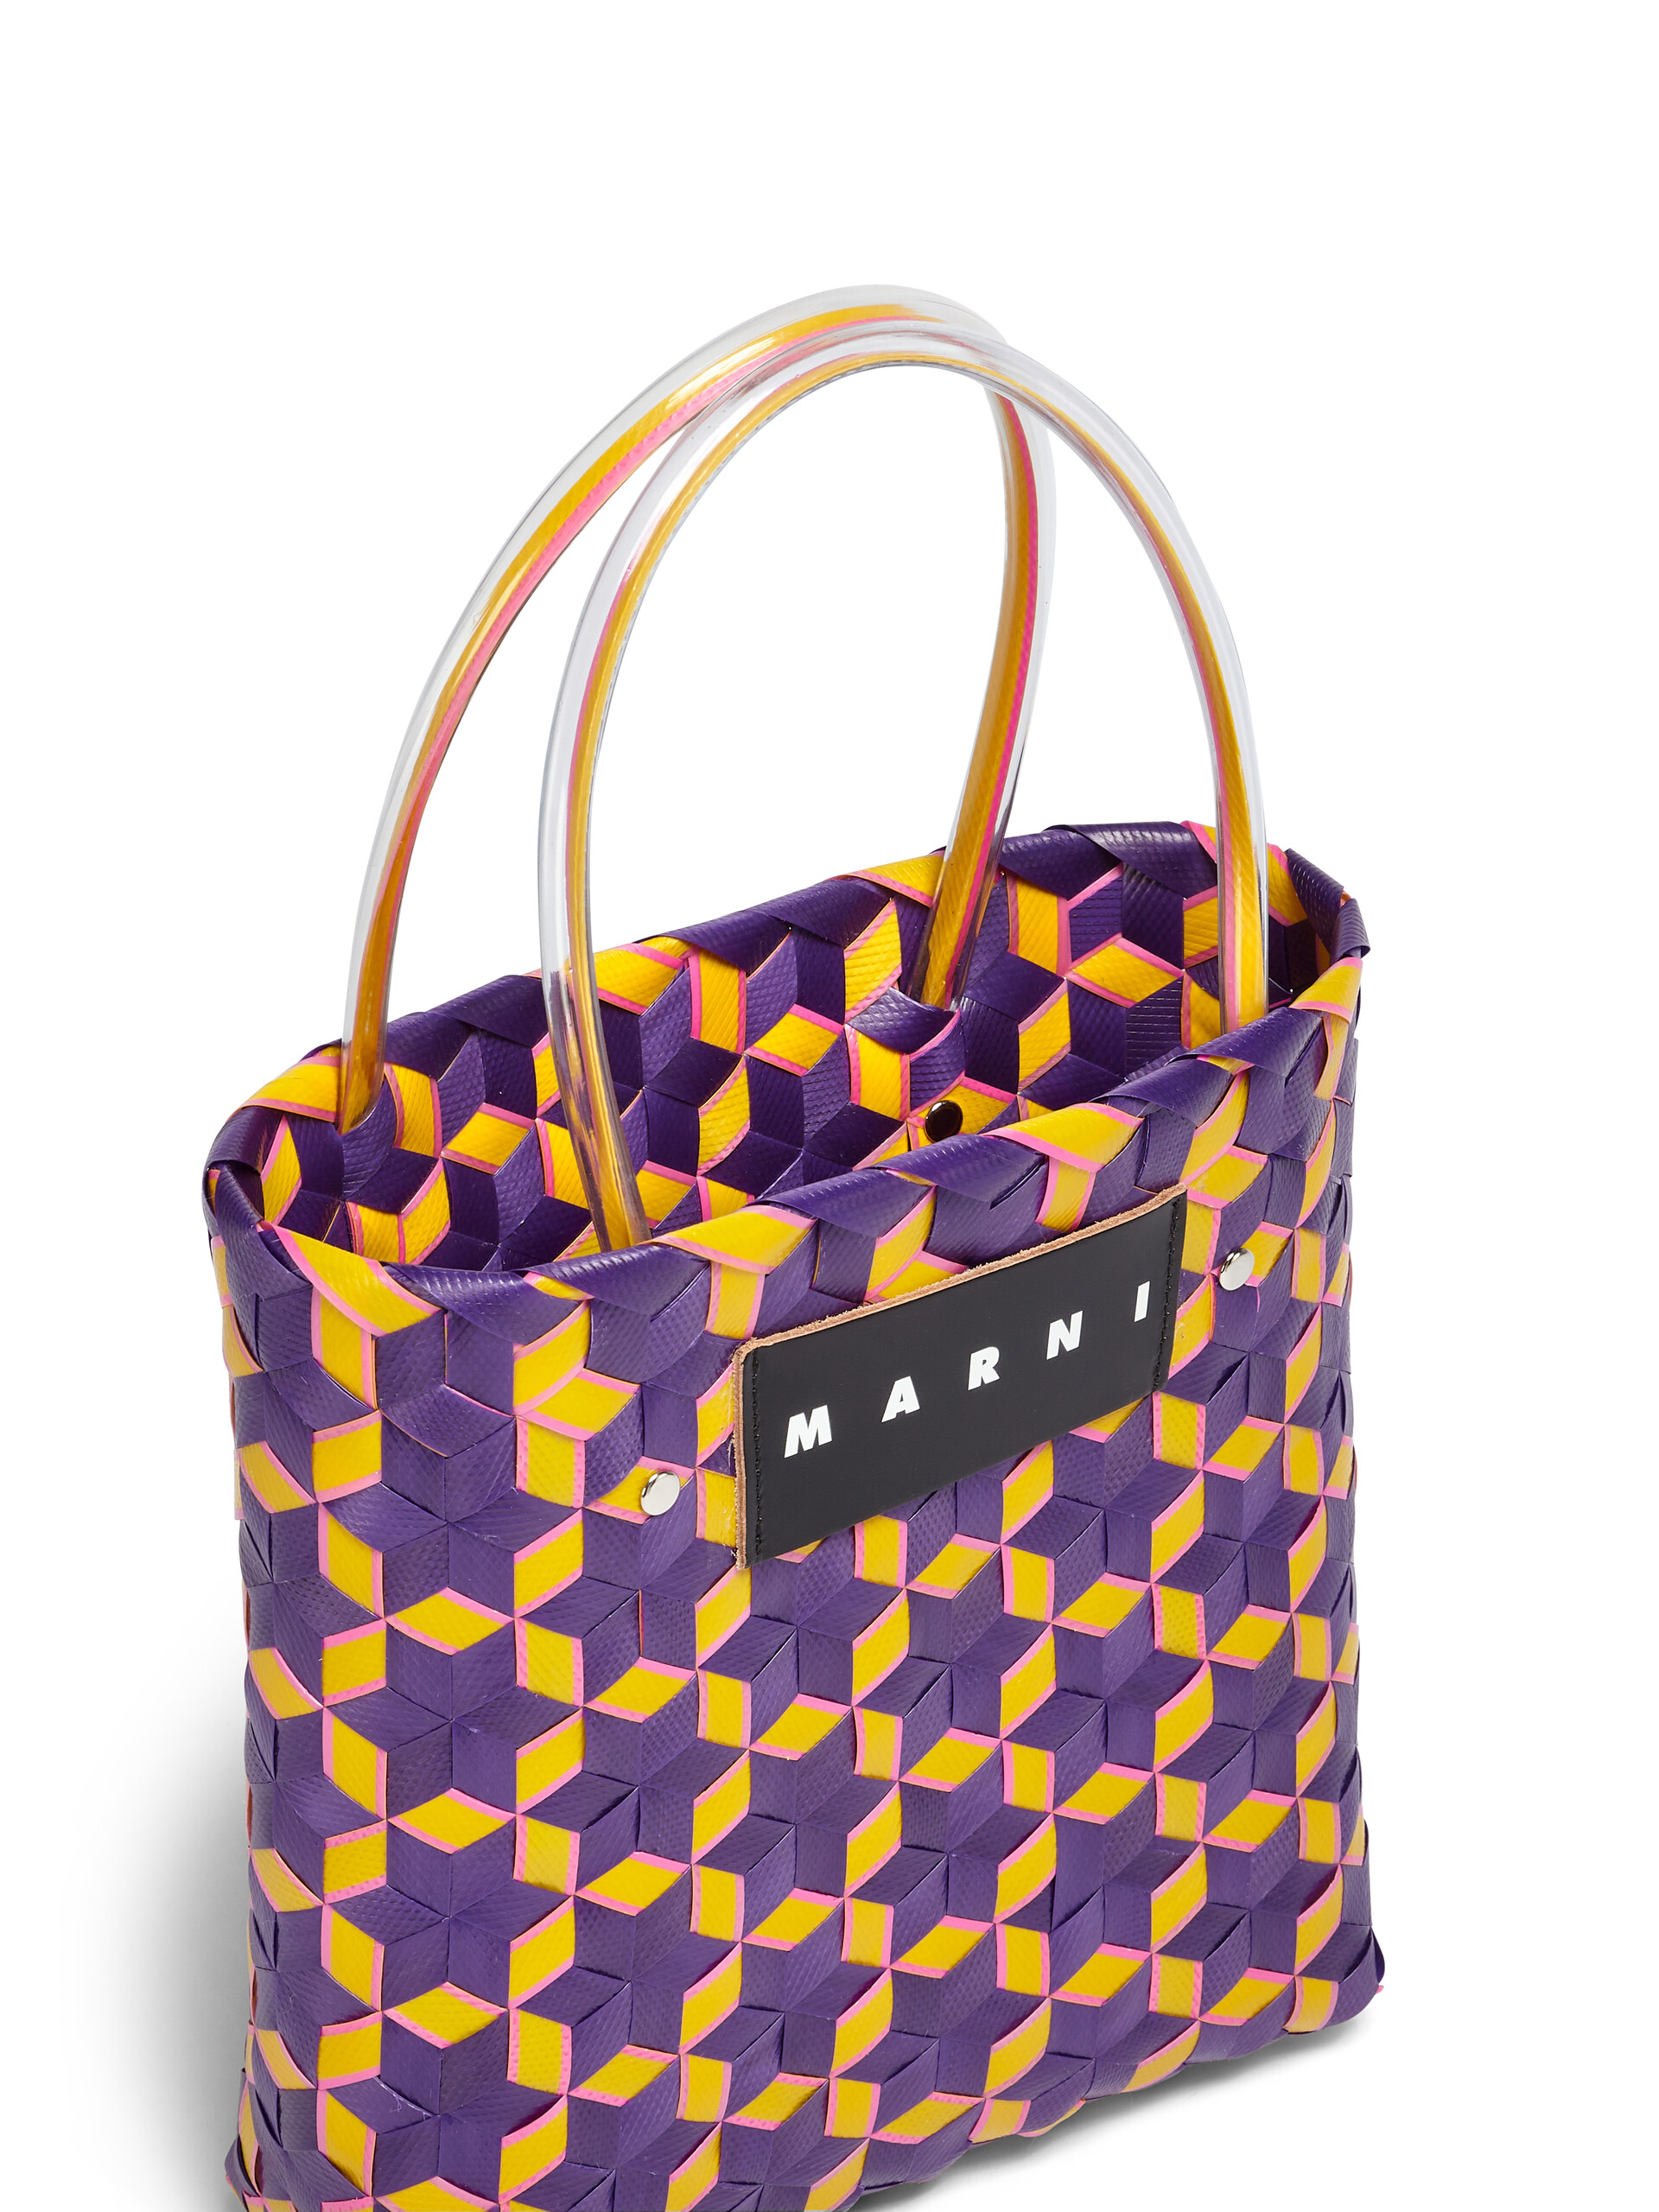 MARNI MARKET bag in purple star woven material - Bags - Image 4